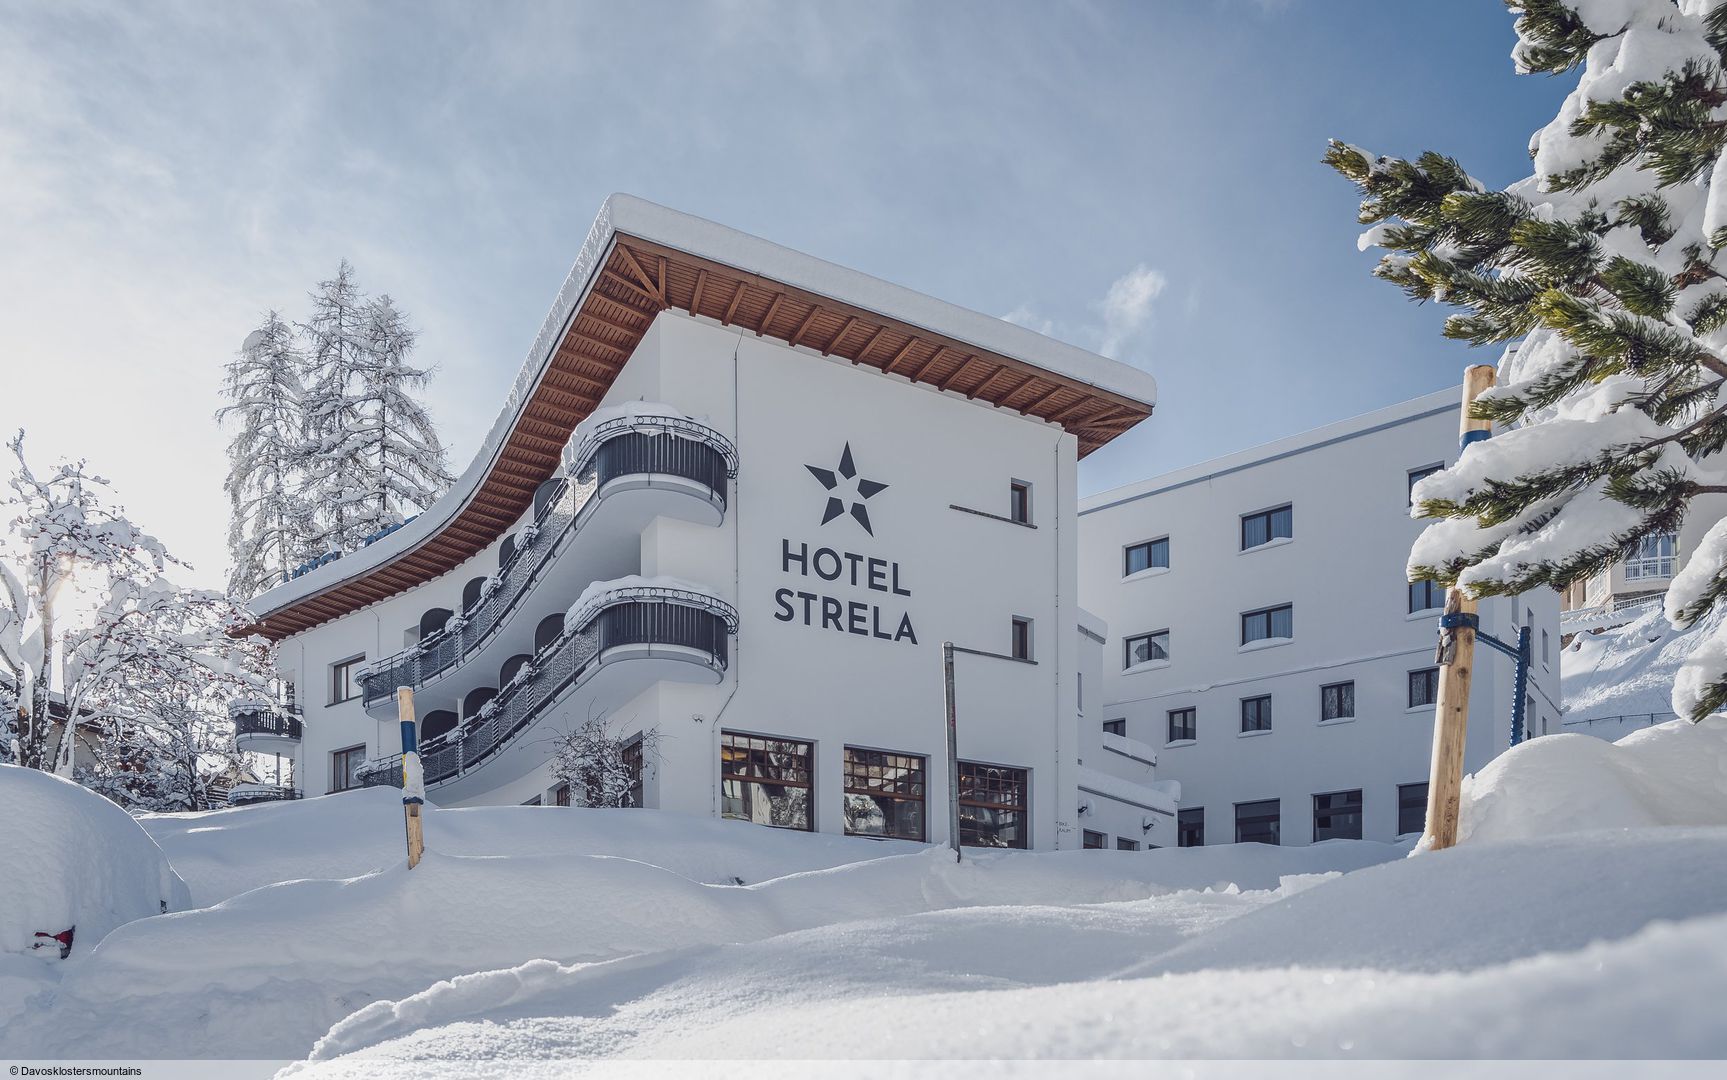 Hotel Strela in Davos, Hotel Strela / Schweiz